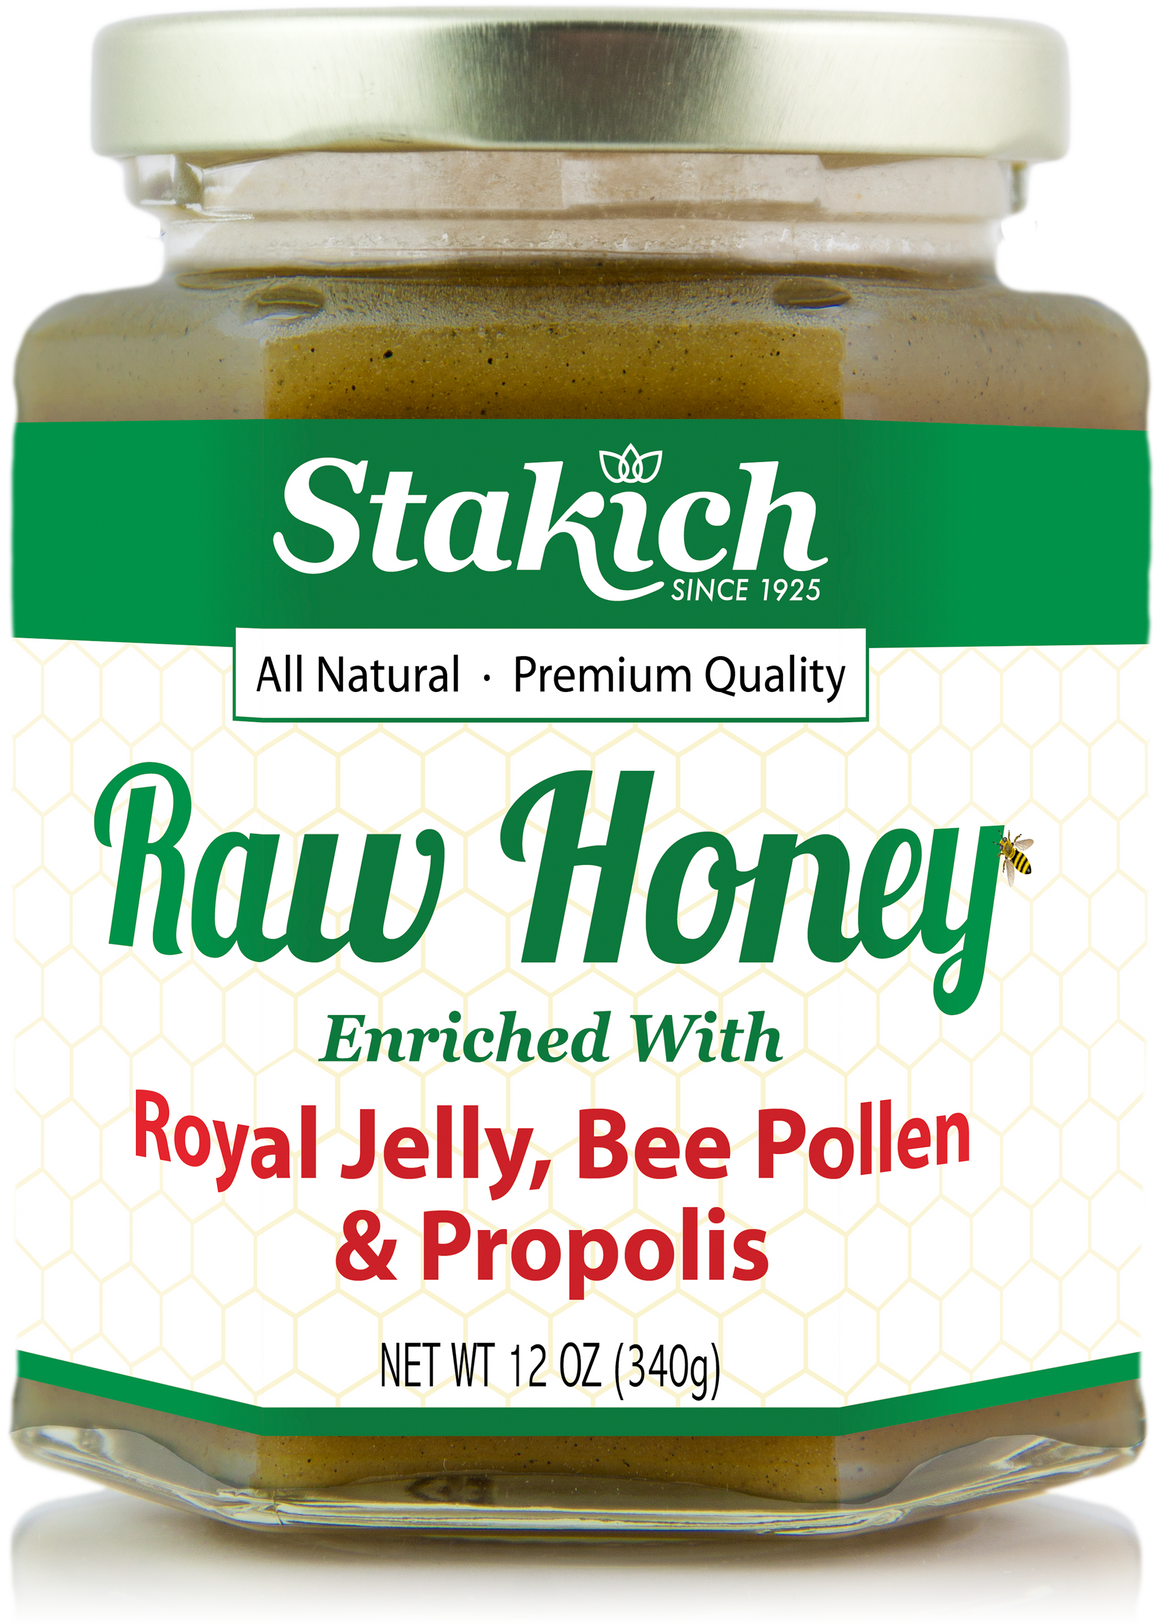 40 oz Royal Jelly, Bee Pollen & Propolis Enriched Raw Honey